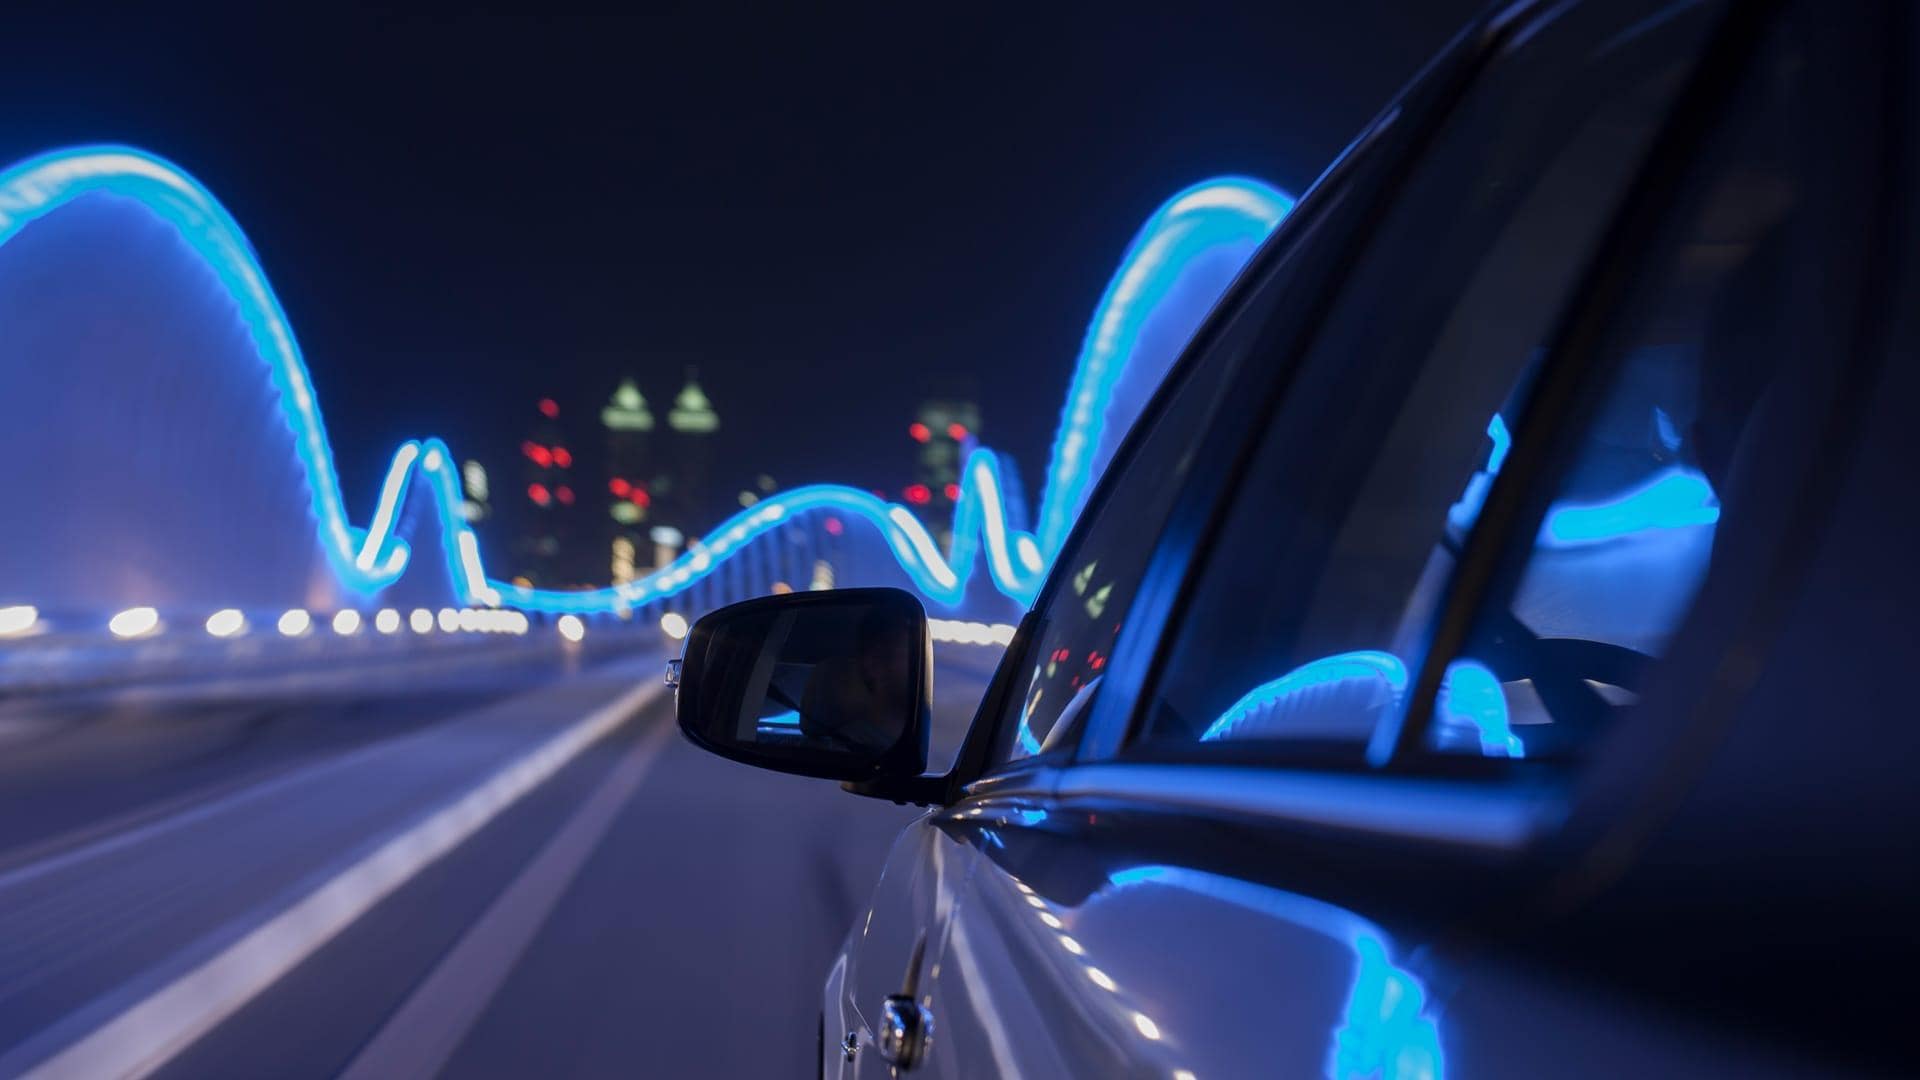 Car driving at night over illuminated bridge